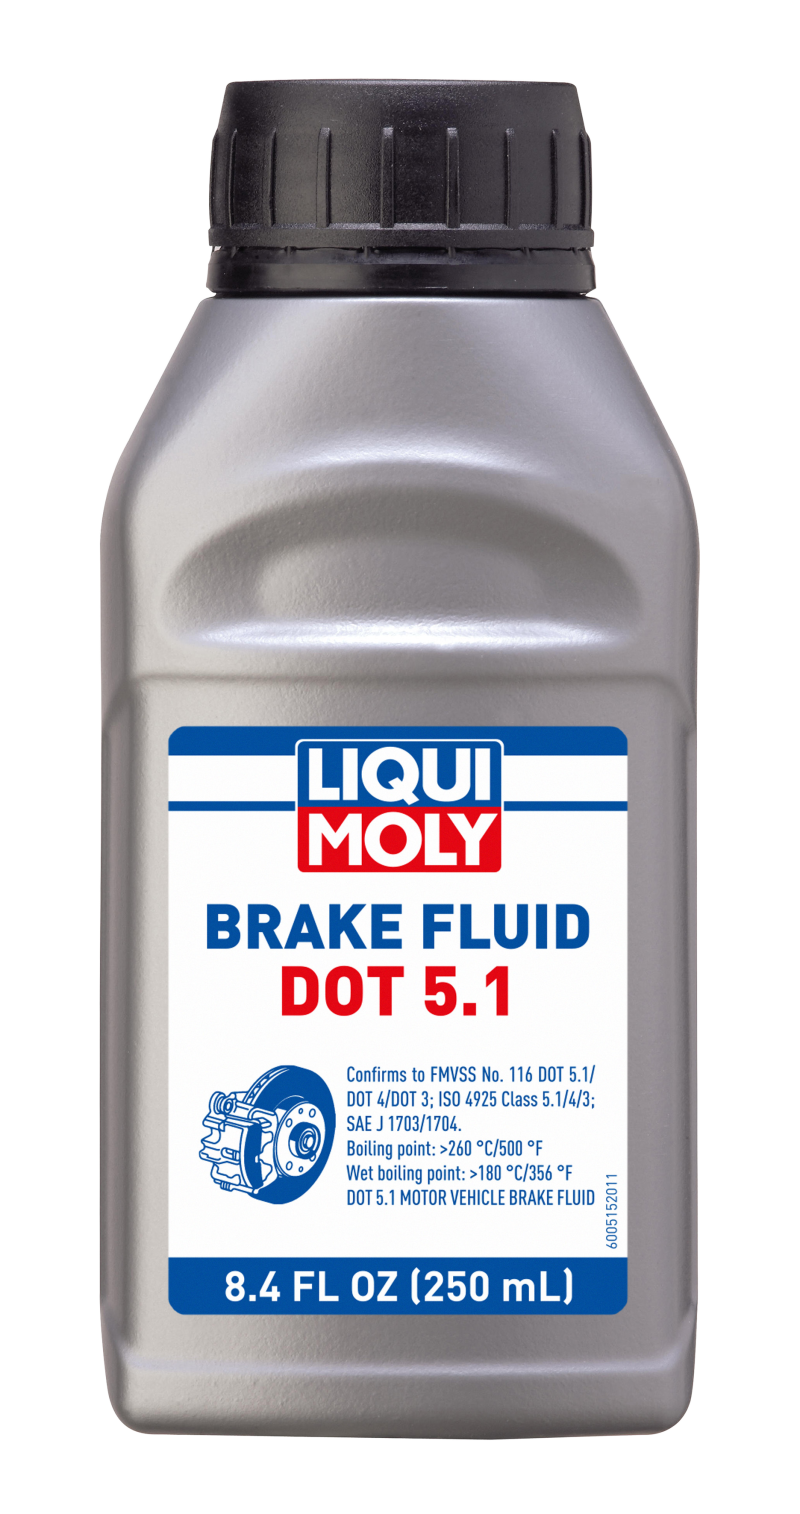 LIQUI MOLY 250mL Brake Fluid DOT 5.1 Case of 24 Units